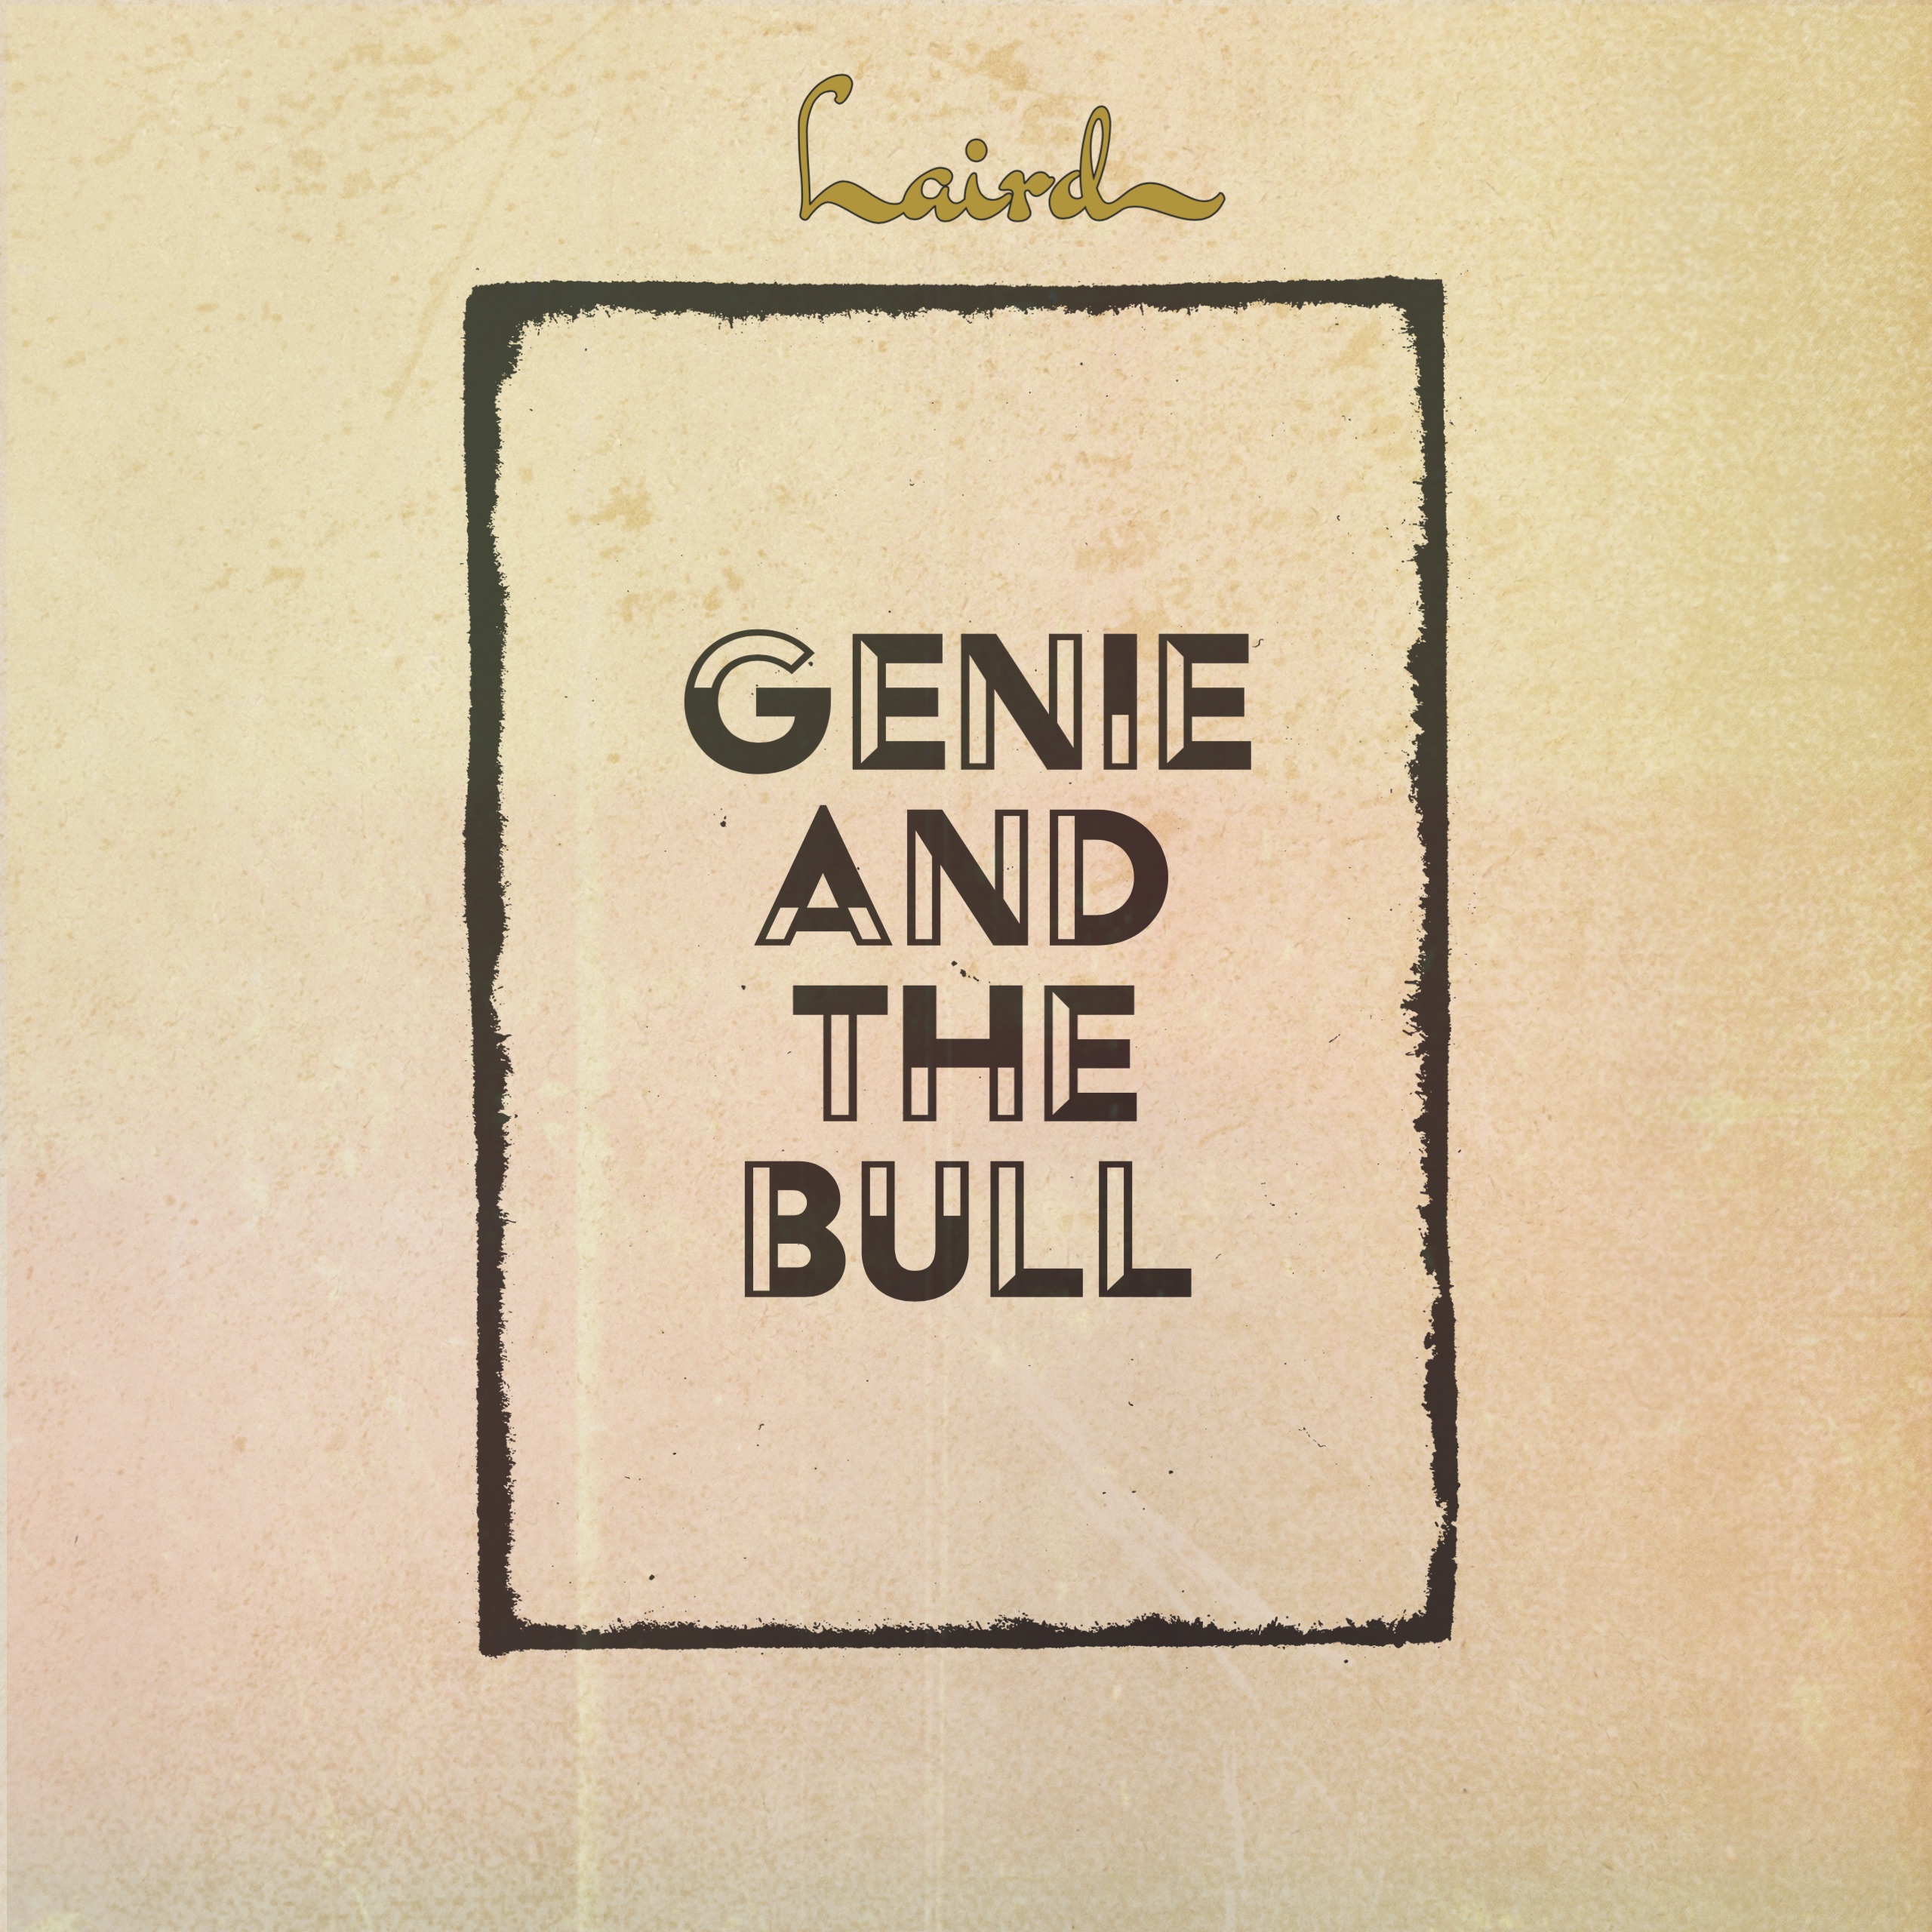 डाउनलोड करा Genie And The Bull